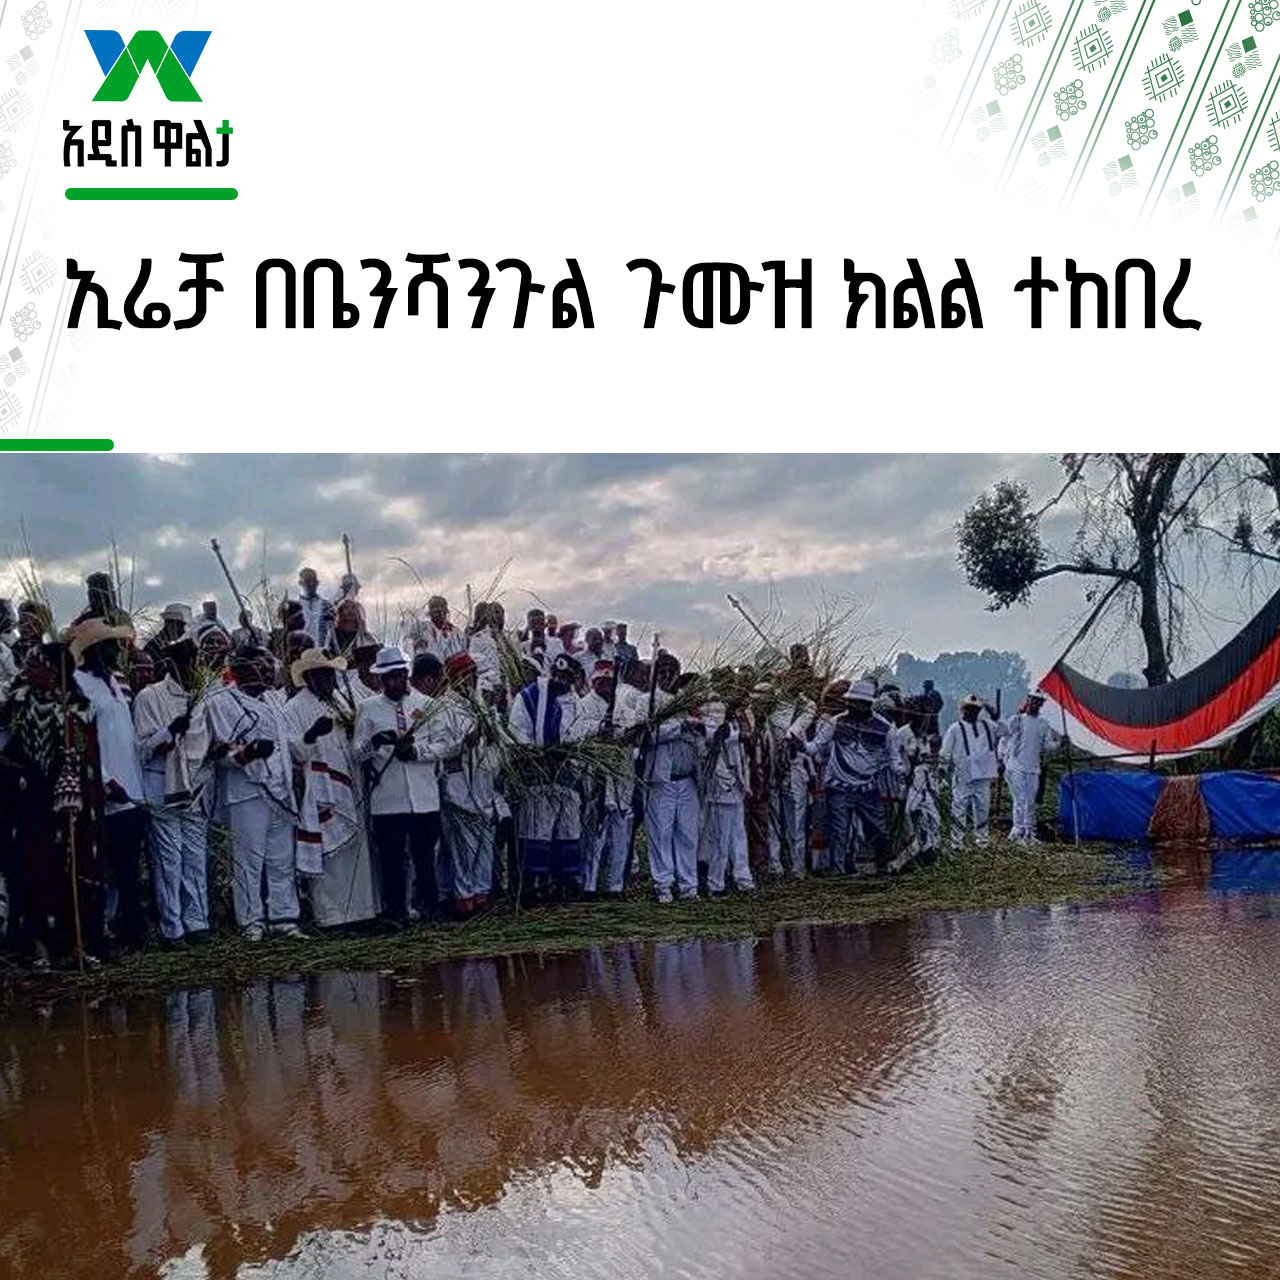 Irreechaa Festival celebrated in Benishangul Gumuz region of Ethiopia